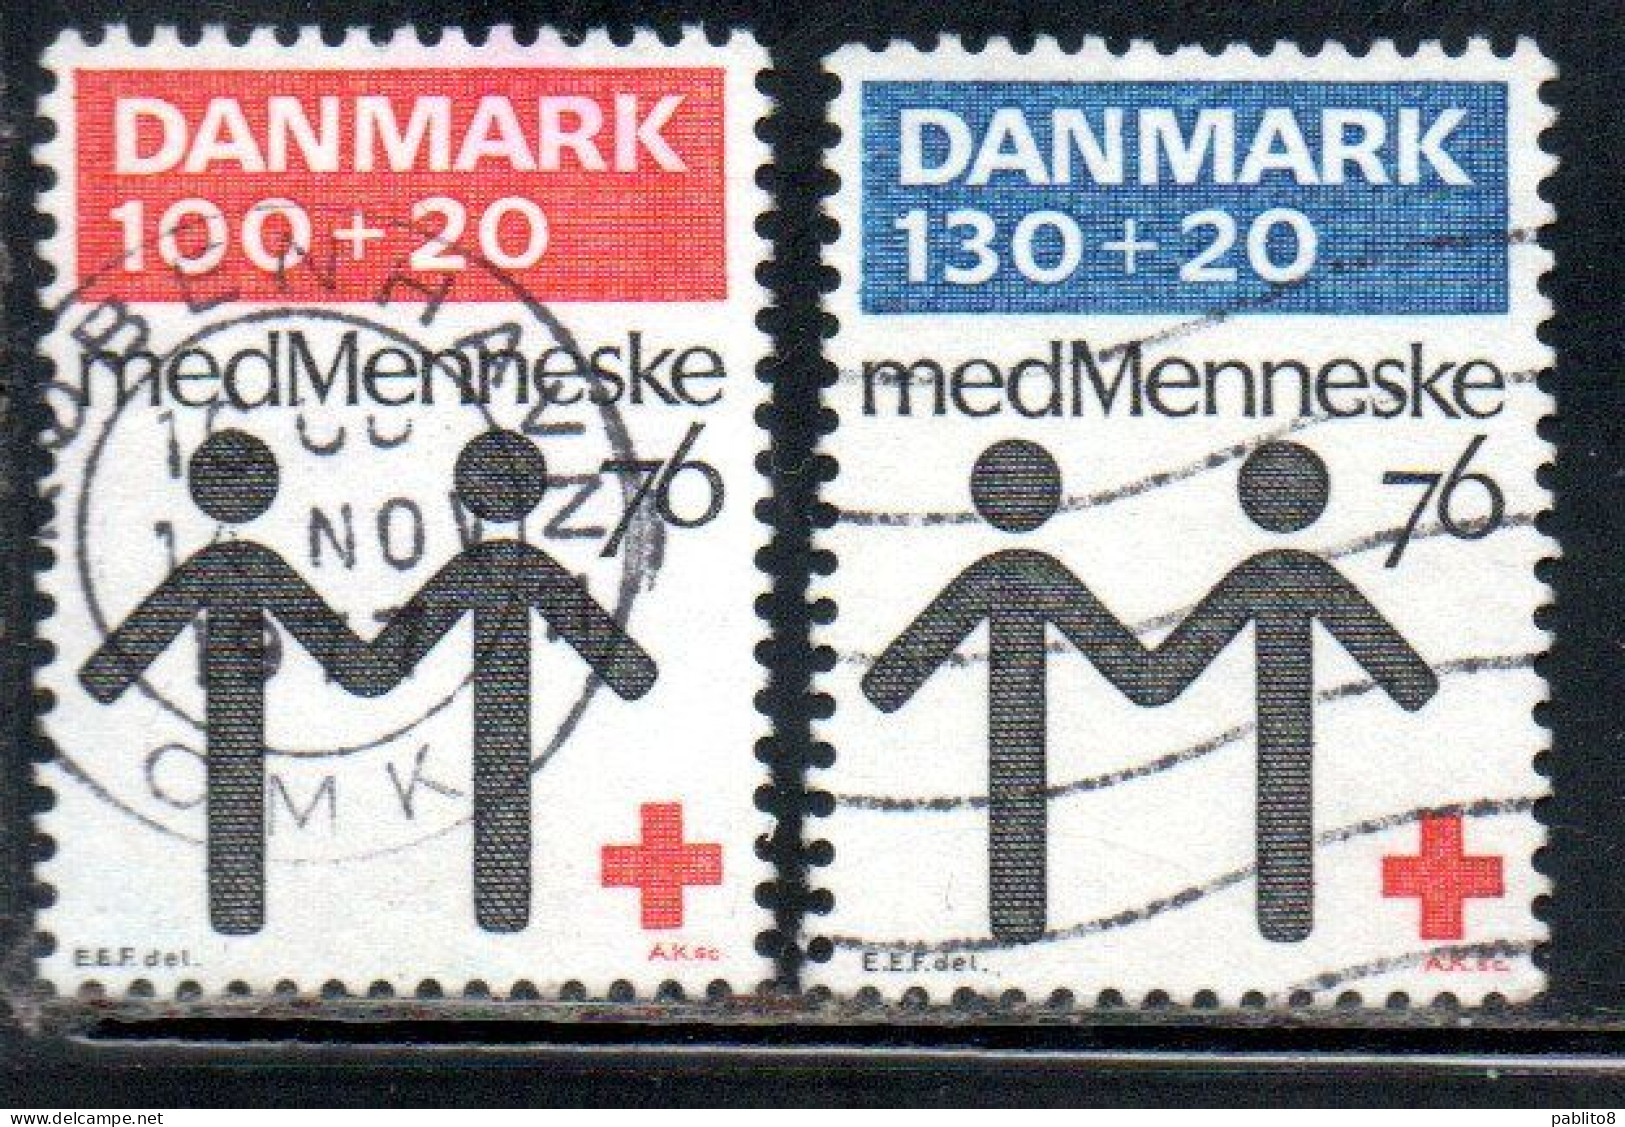 DANEMARK DANMARK DENMARK DANIMARCA 1976 CENTENARY OF DANISH RED CROSS CROCE ROSSA COMPLETE SET SERIE USED USATO OBLITERE - Used Stamps